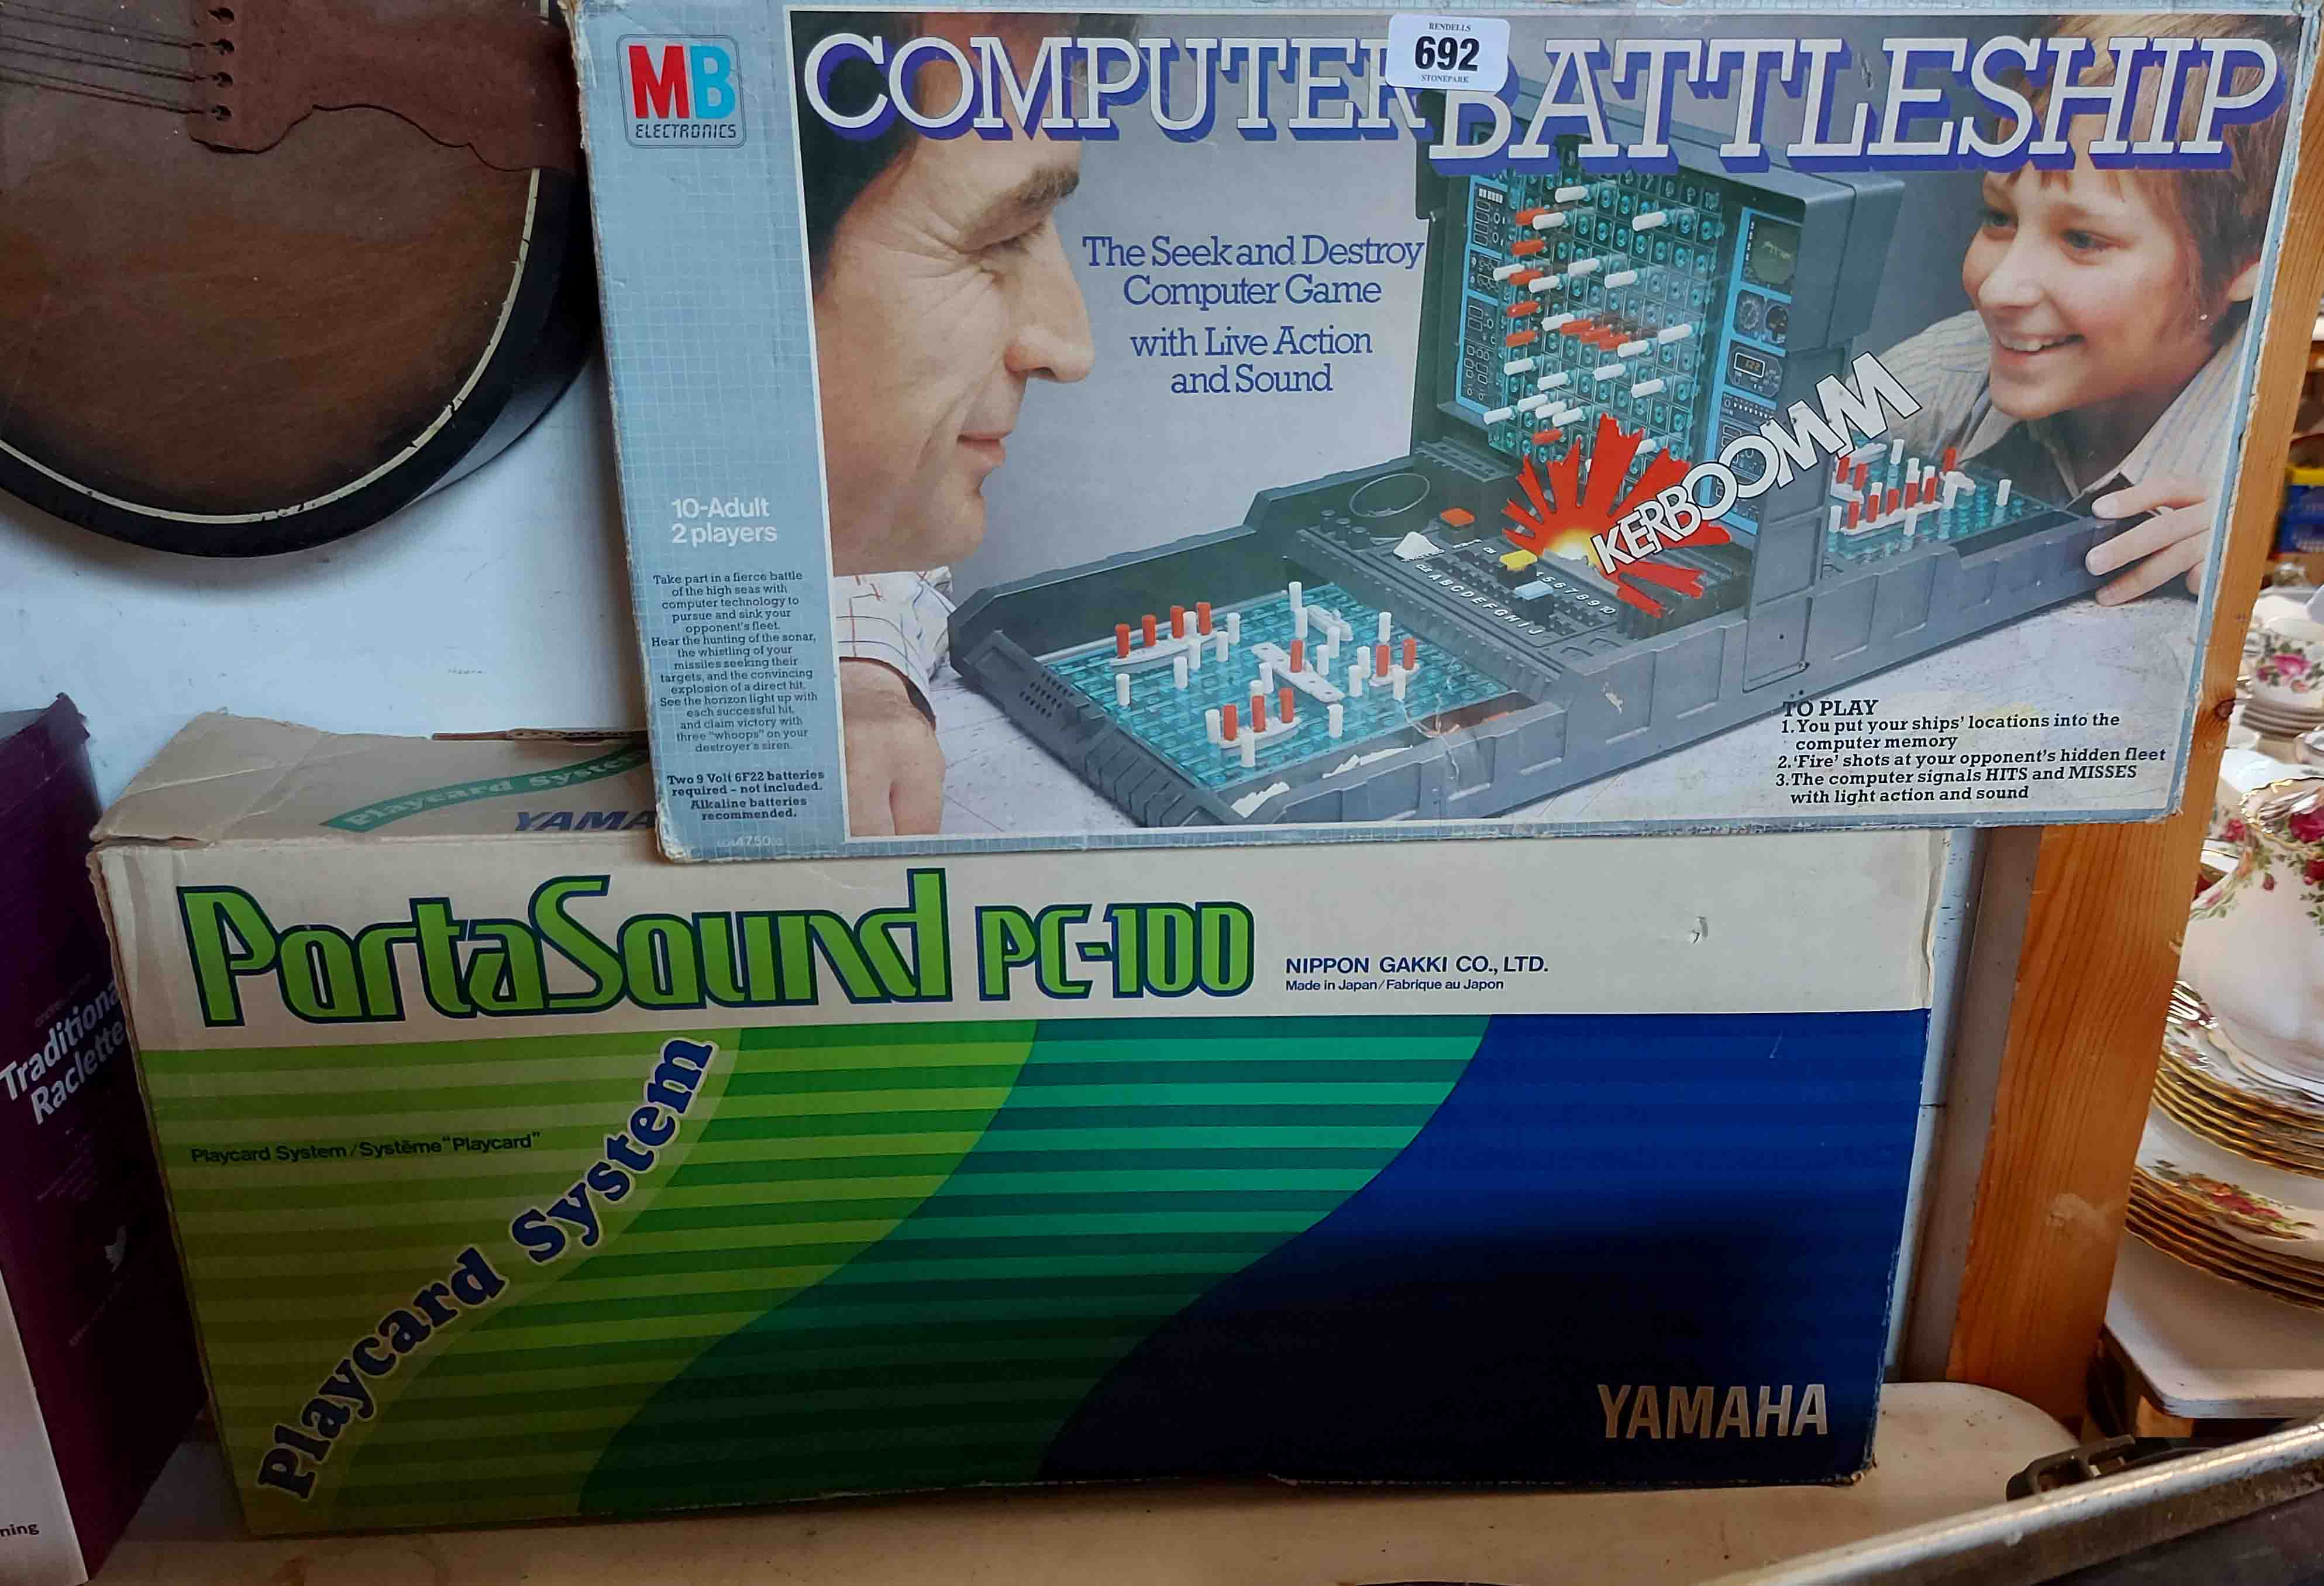 A Yamaha Portasound keyboard - sold with a MB electronic battleships game